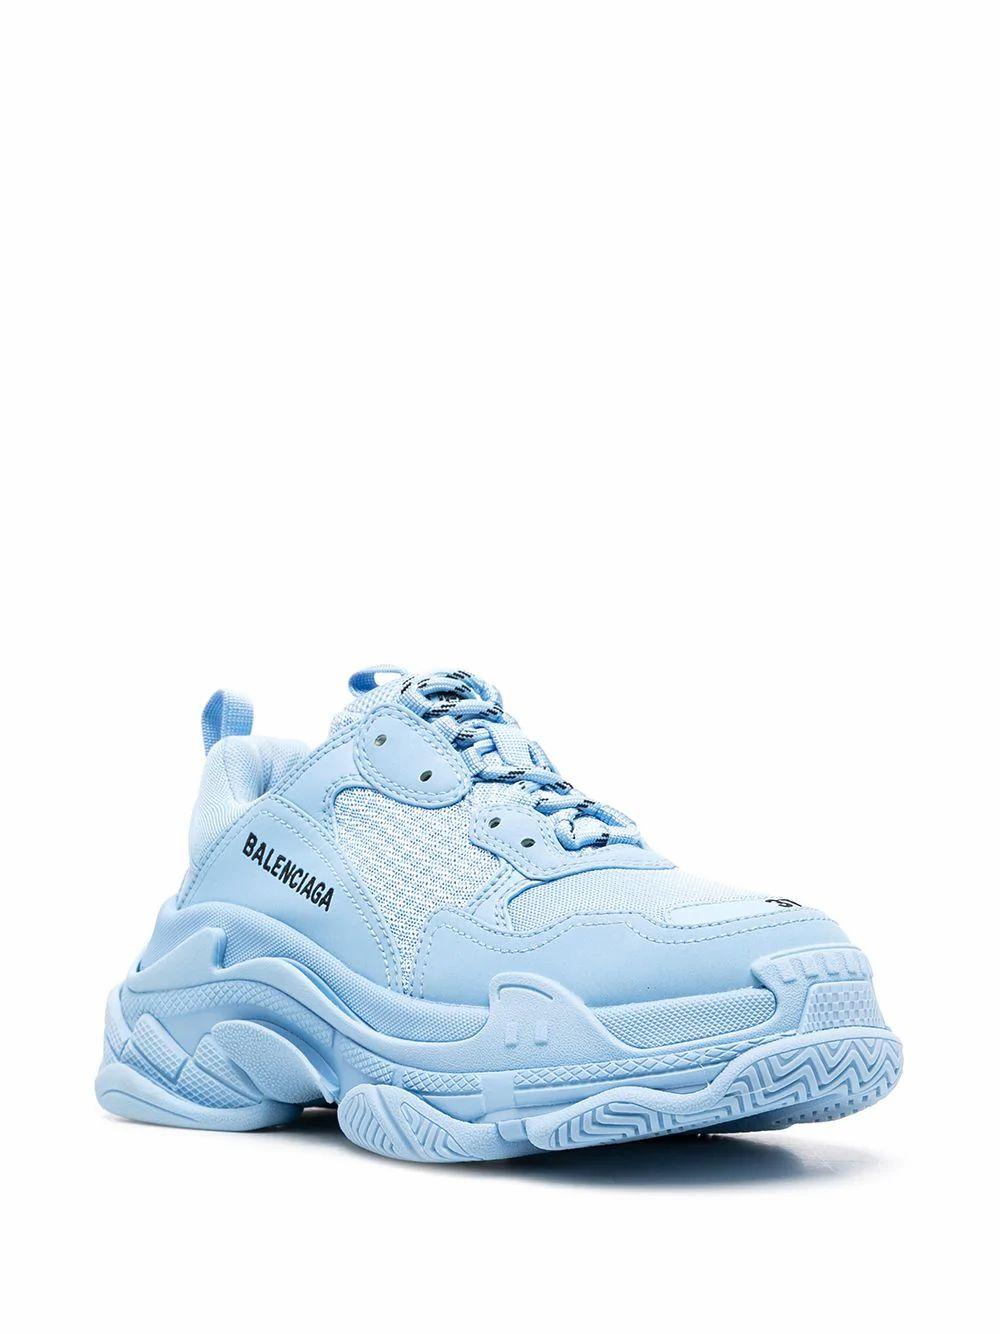 Balenciaga Triple S Sneaker Clear Sole  Deep Blue SKU 541624 W2GA1  Hệ  thống phân phối Air Jordan chính hãng